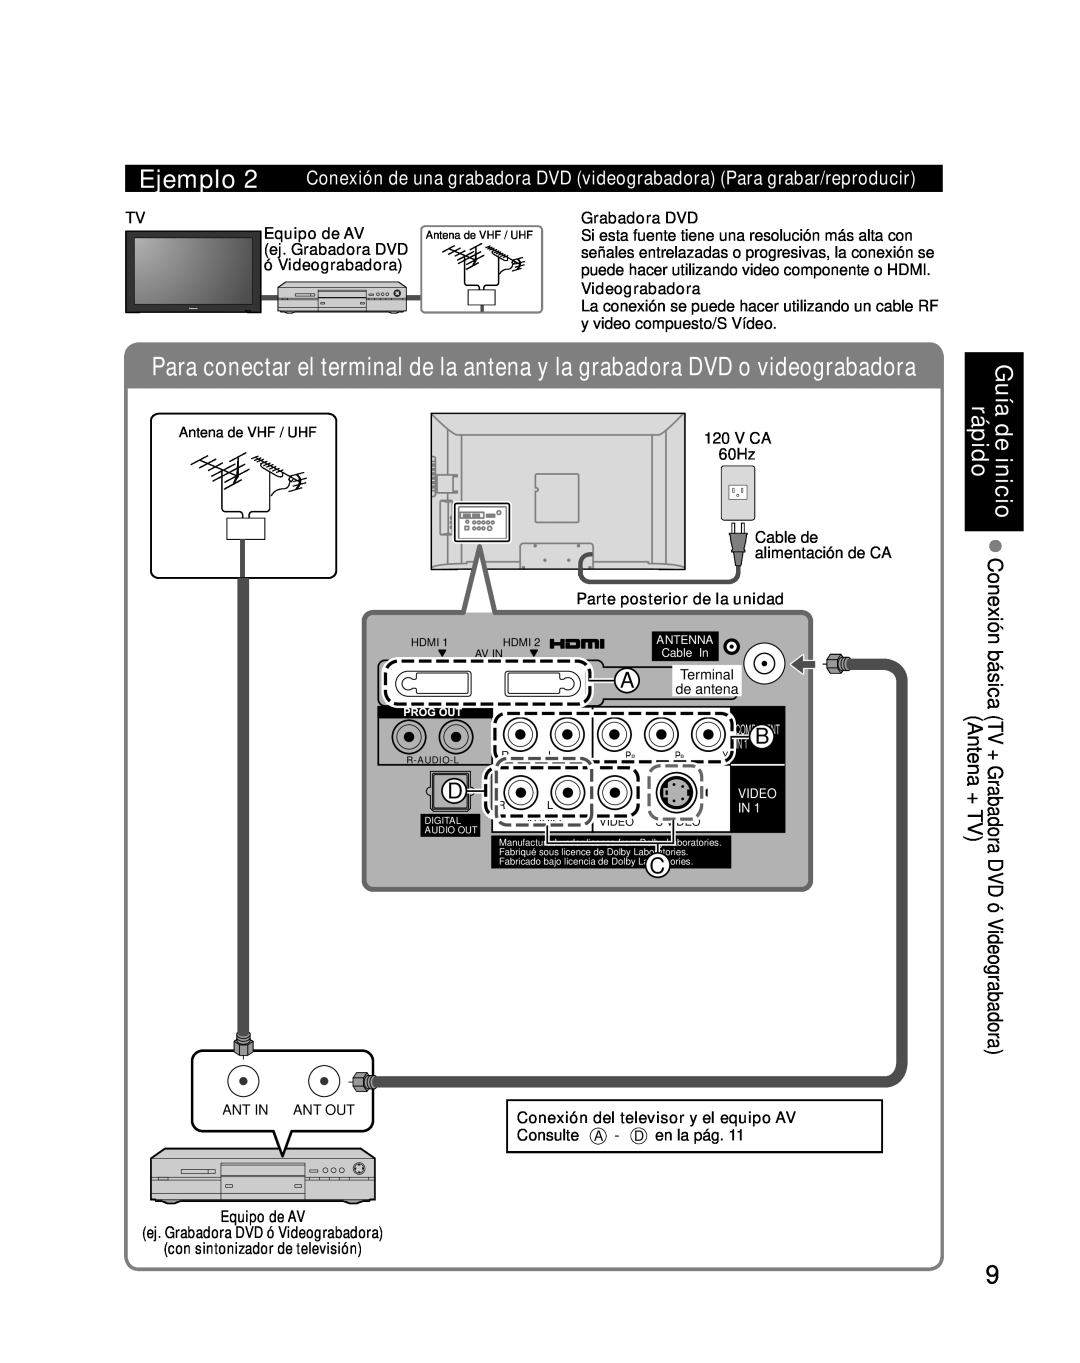 Panasonic TC-26LX85 quick start Conexión de una grabadora DVD videograbadora Para grabar/reproducir, Ejemplo 